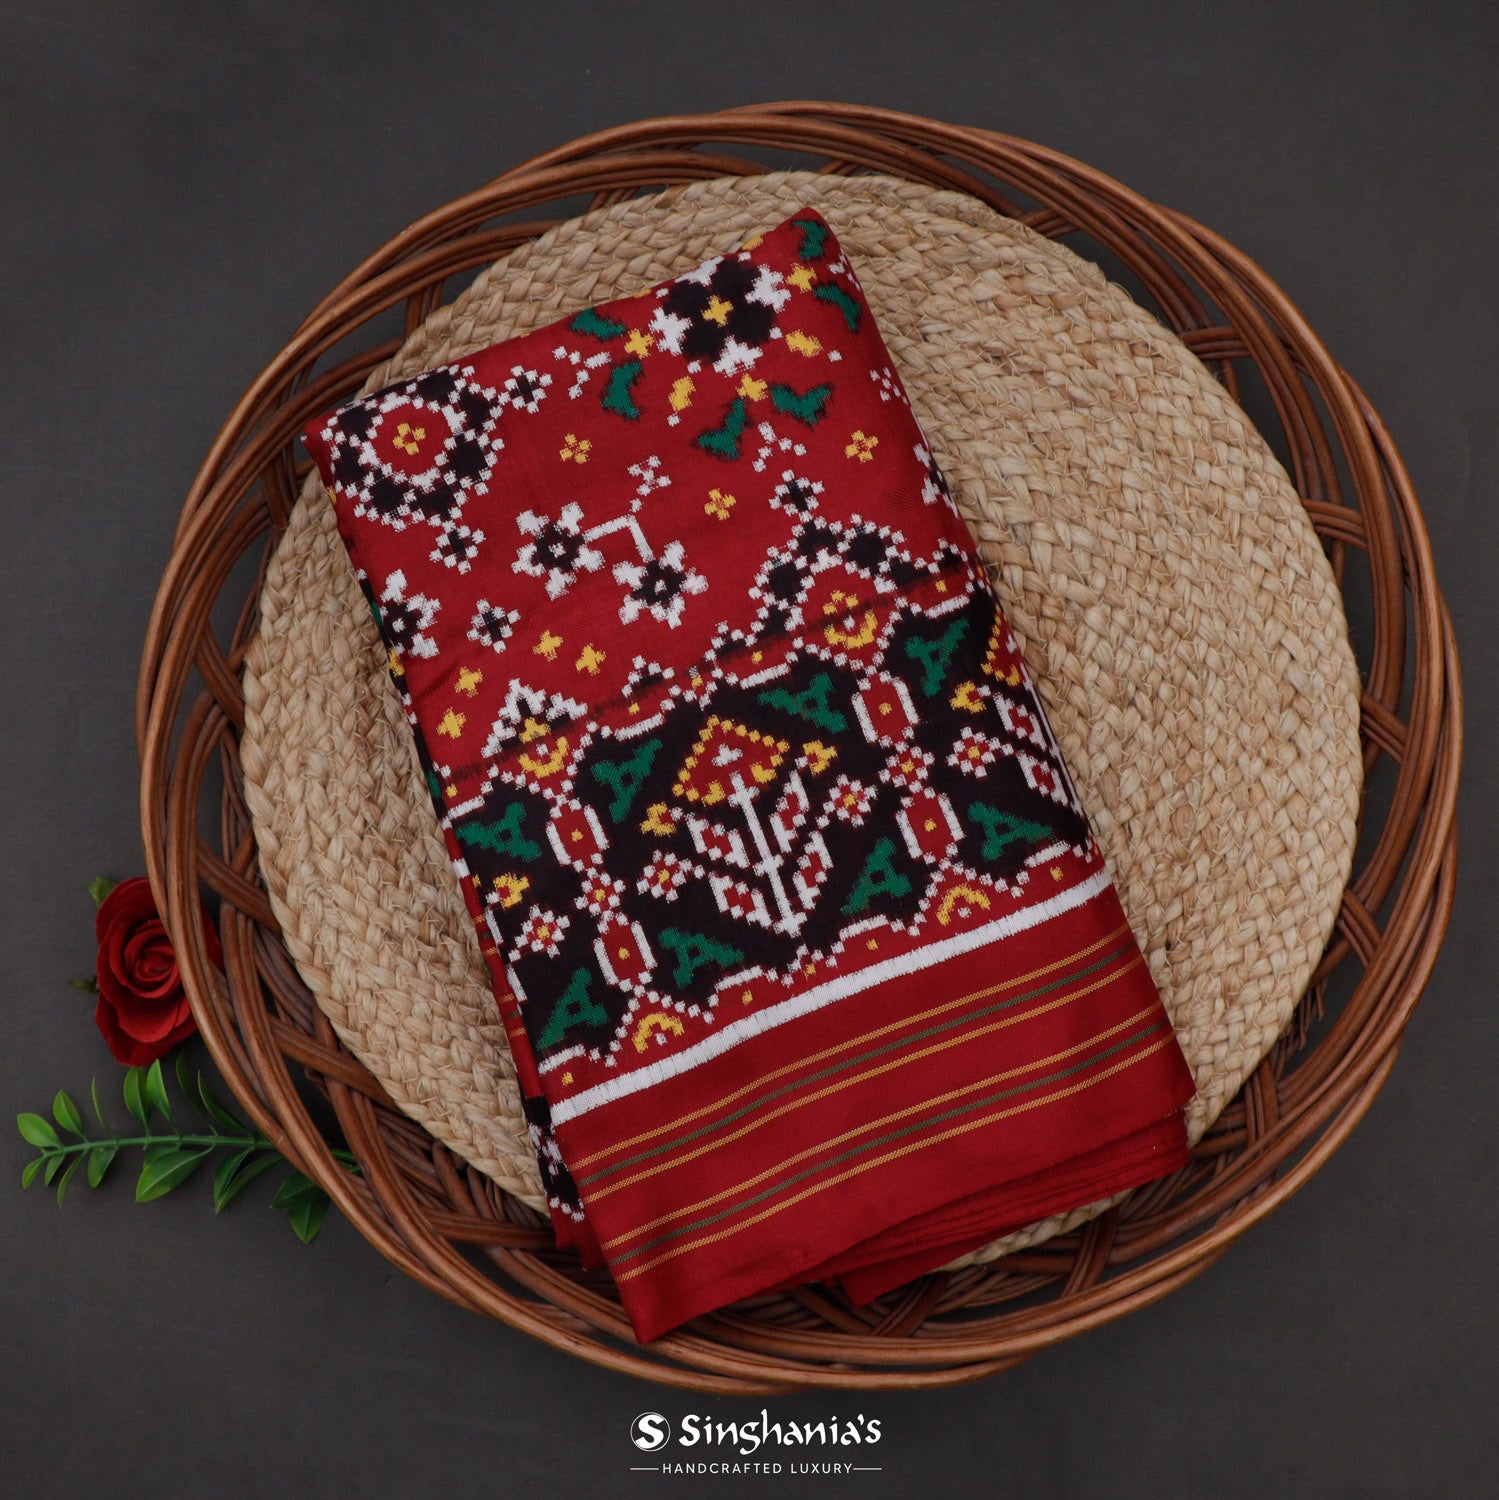 Dark Red Patola Silk Saree With Floral Fauna Pattern